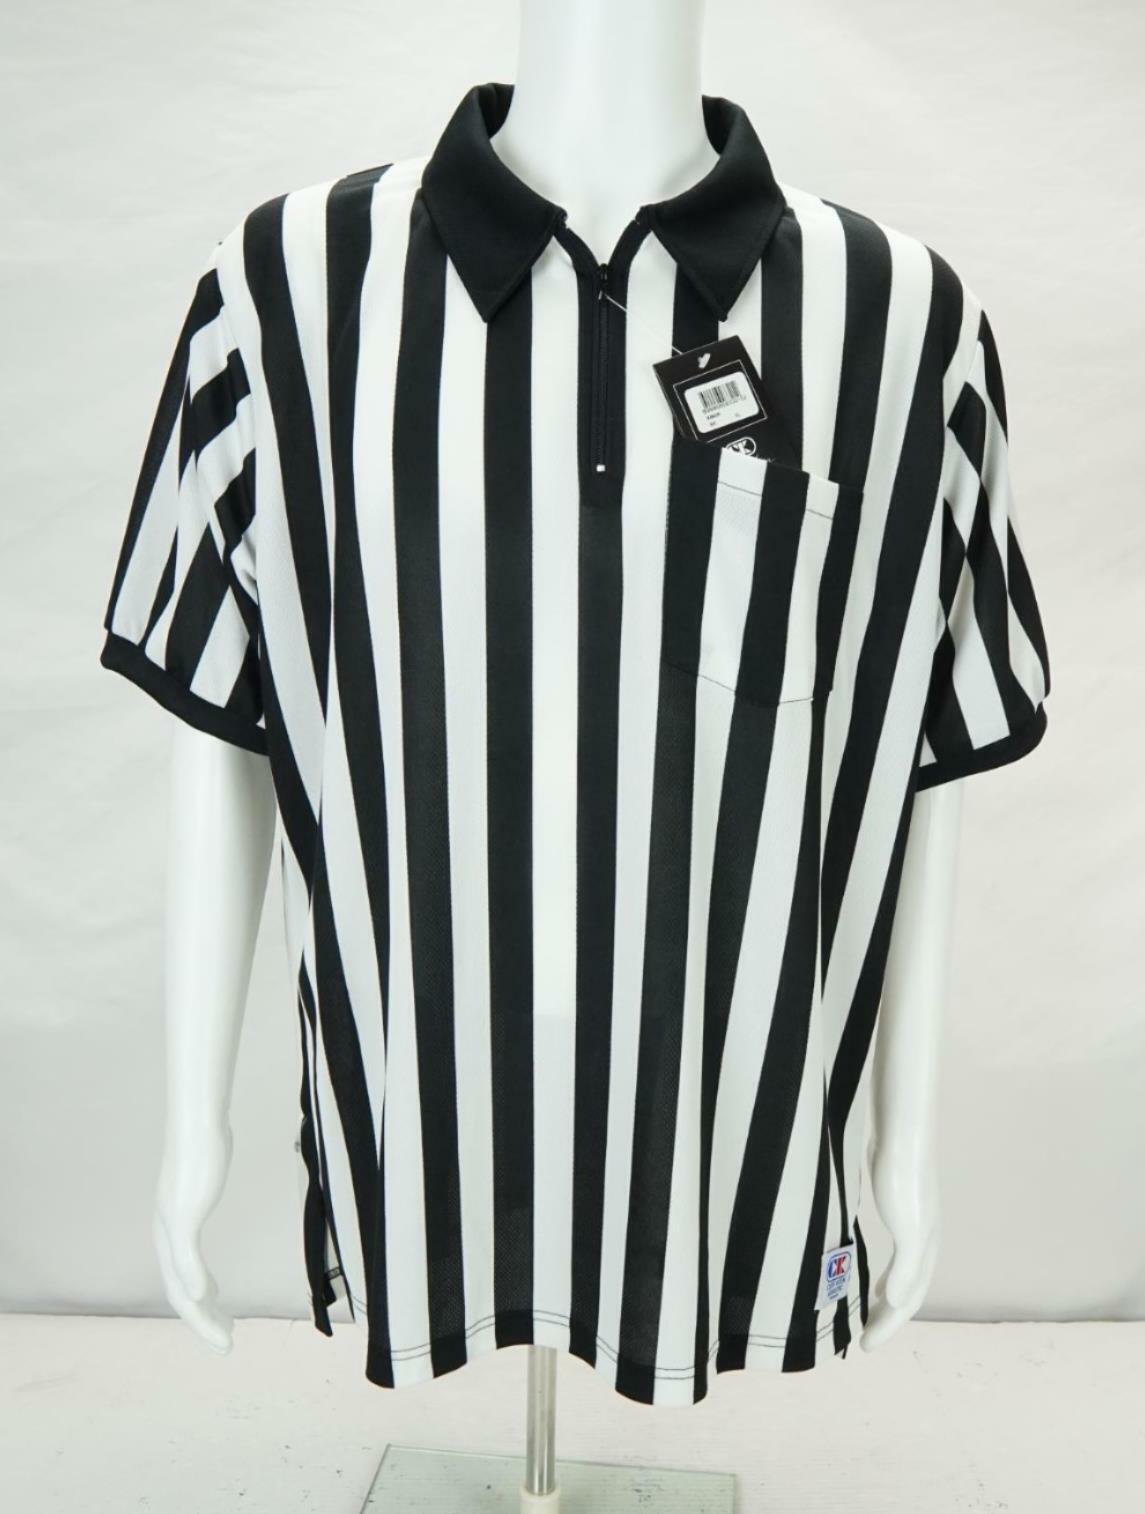 Nwt Cliff Keen Men's Short Sleeve Referee Shirt White Black Size Xl